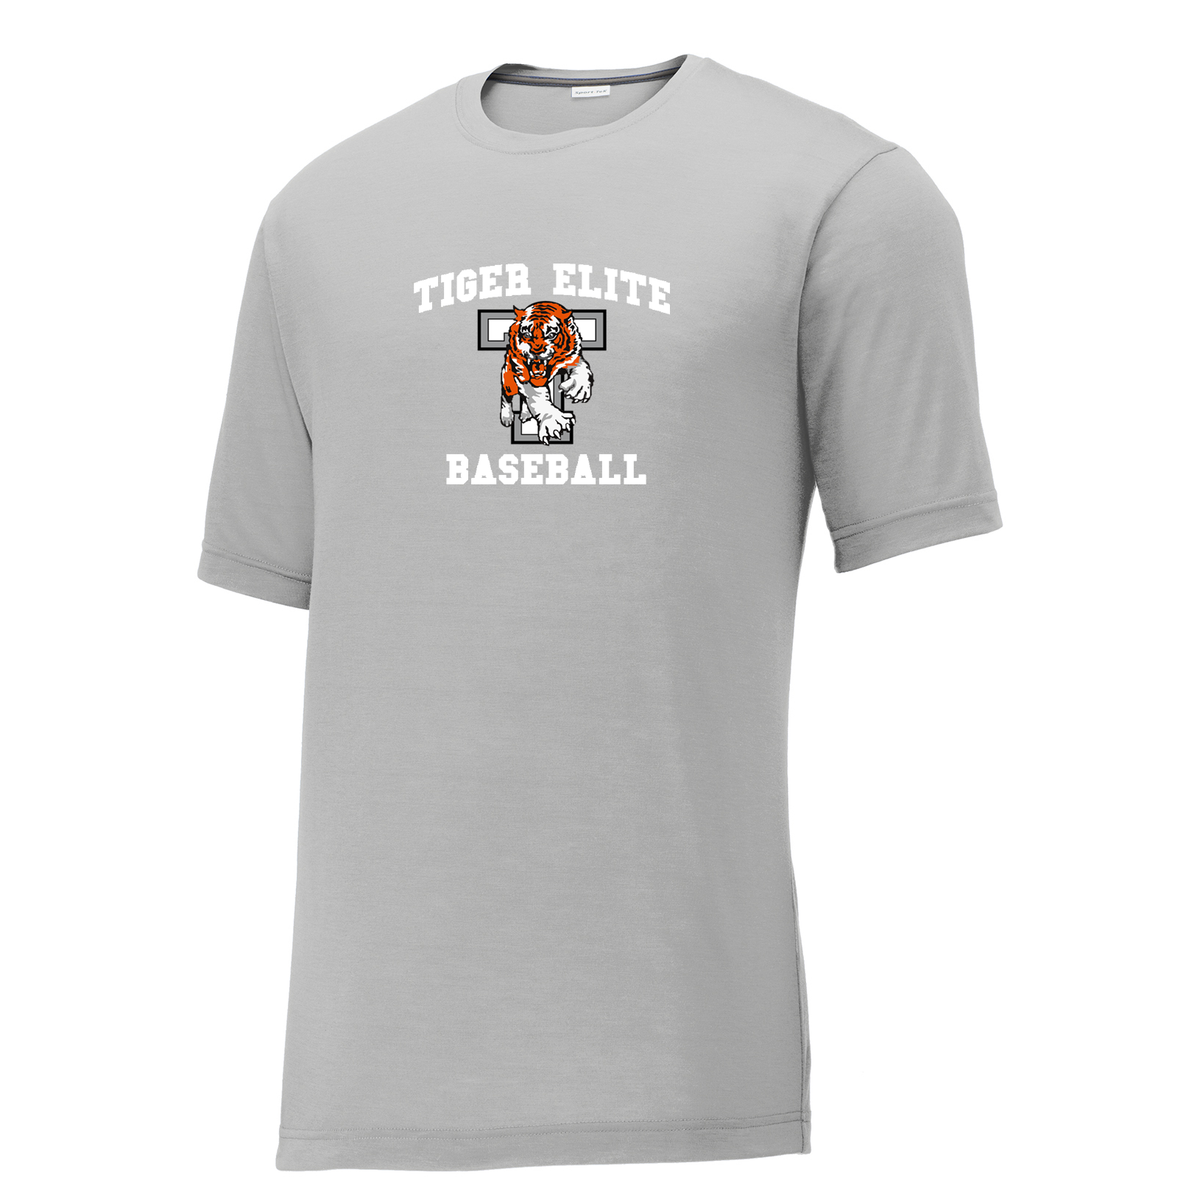 Tiger Elite Baseball CottonTouch Performance T-Shirt